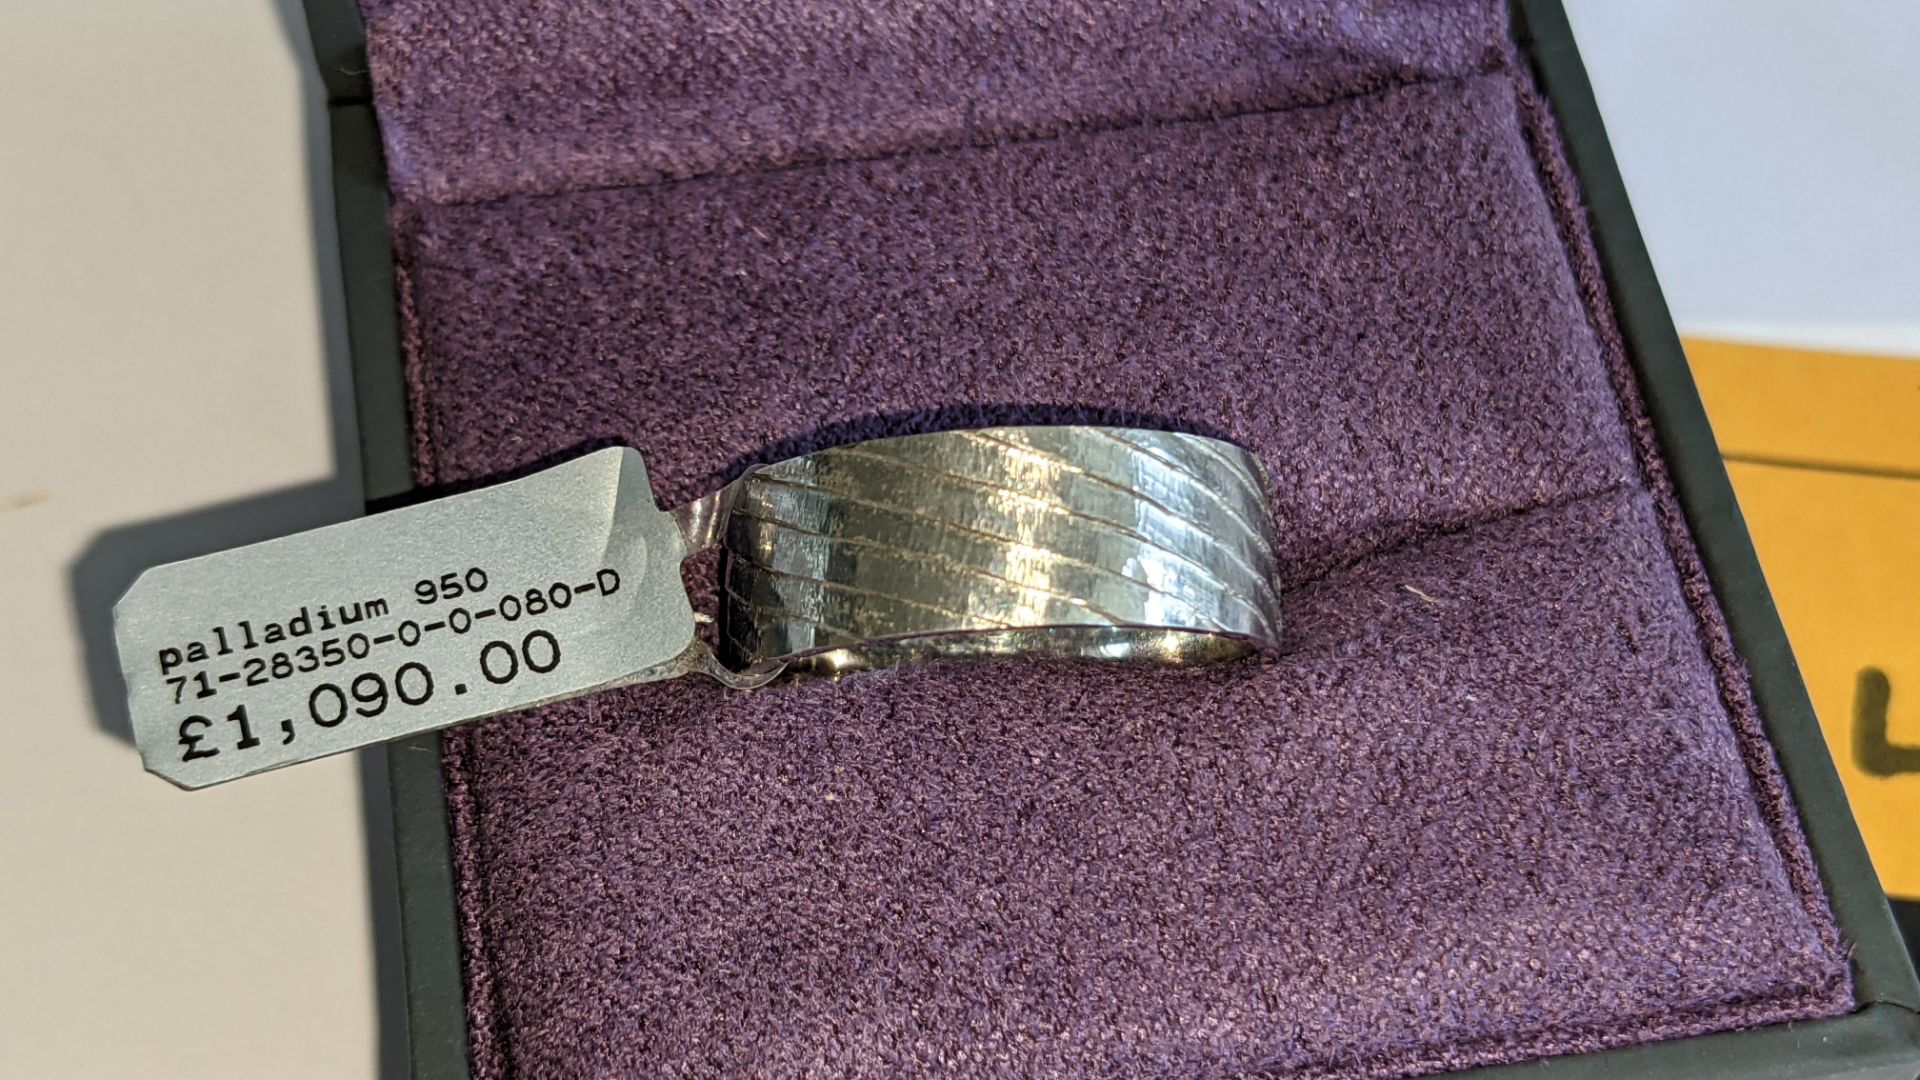 Platinum 950 8mm striped wedding band. RRP £1,090 - Image 4 of 12